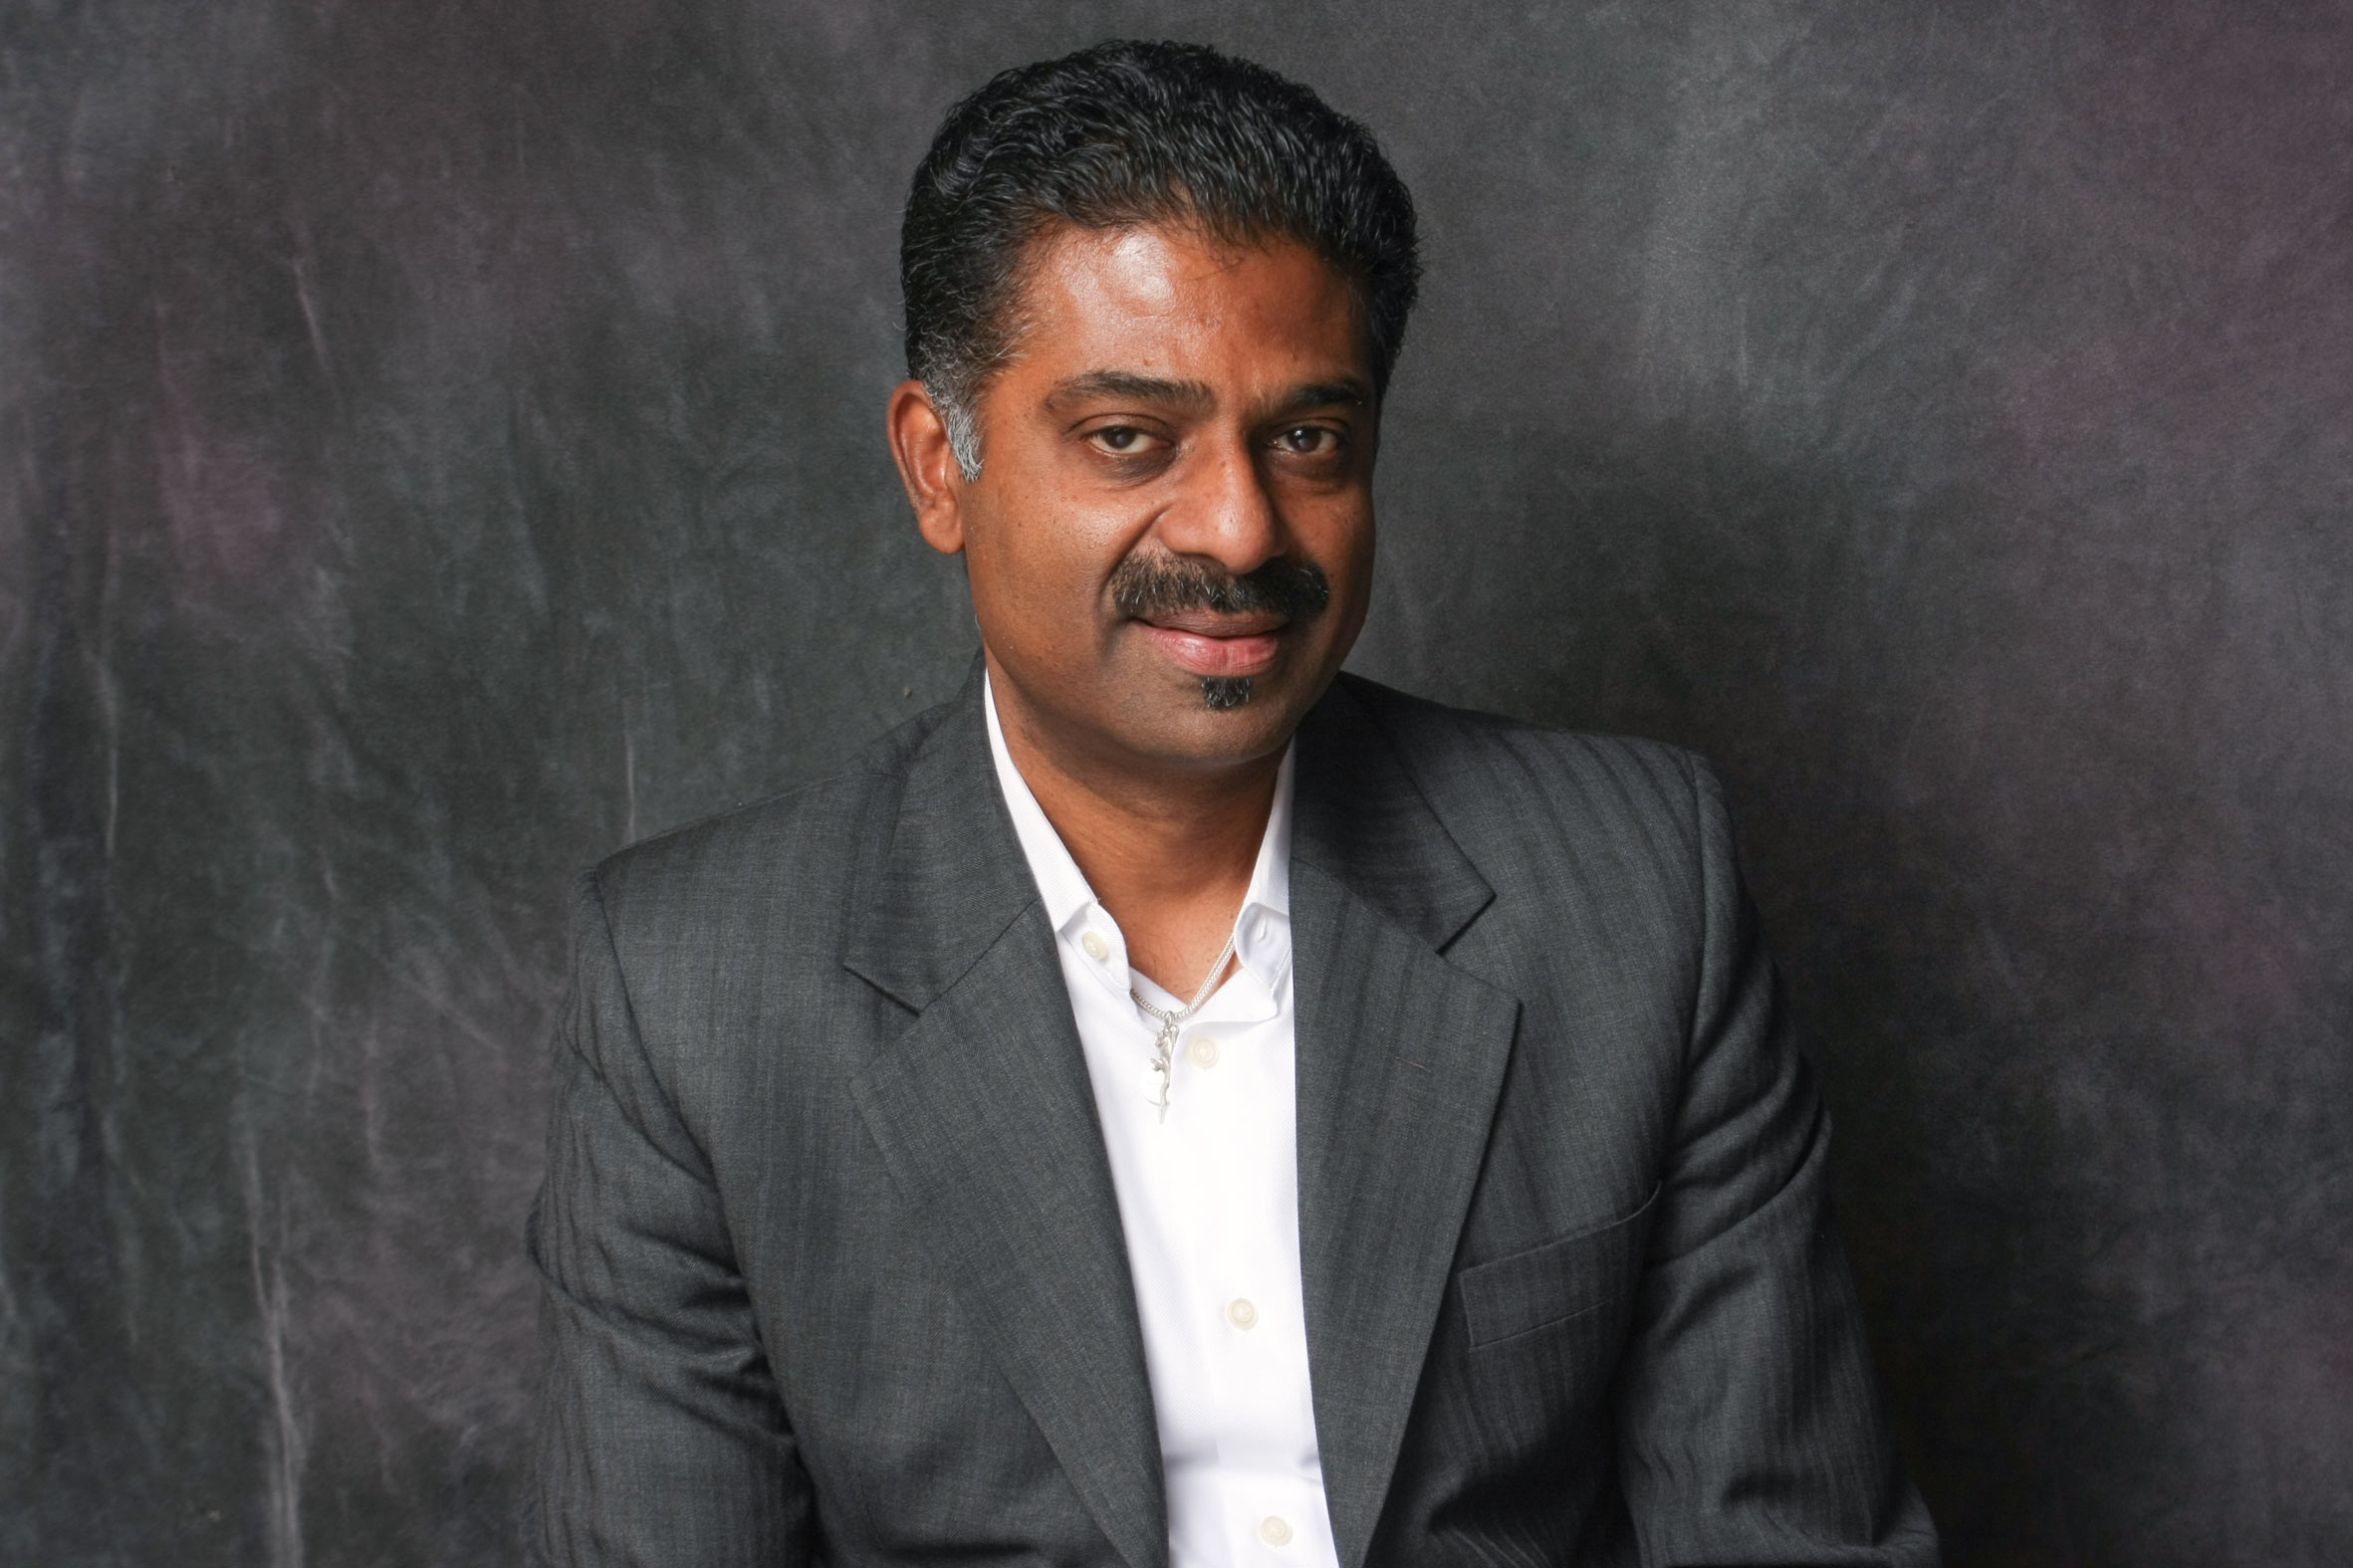 Kirthi Kalyanam, EXECUTIVE DIRECTOR, RETAIL MANAGEMENT INSTITUTE